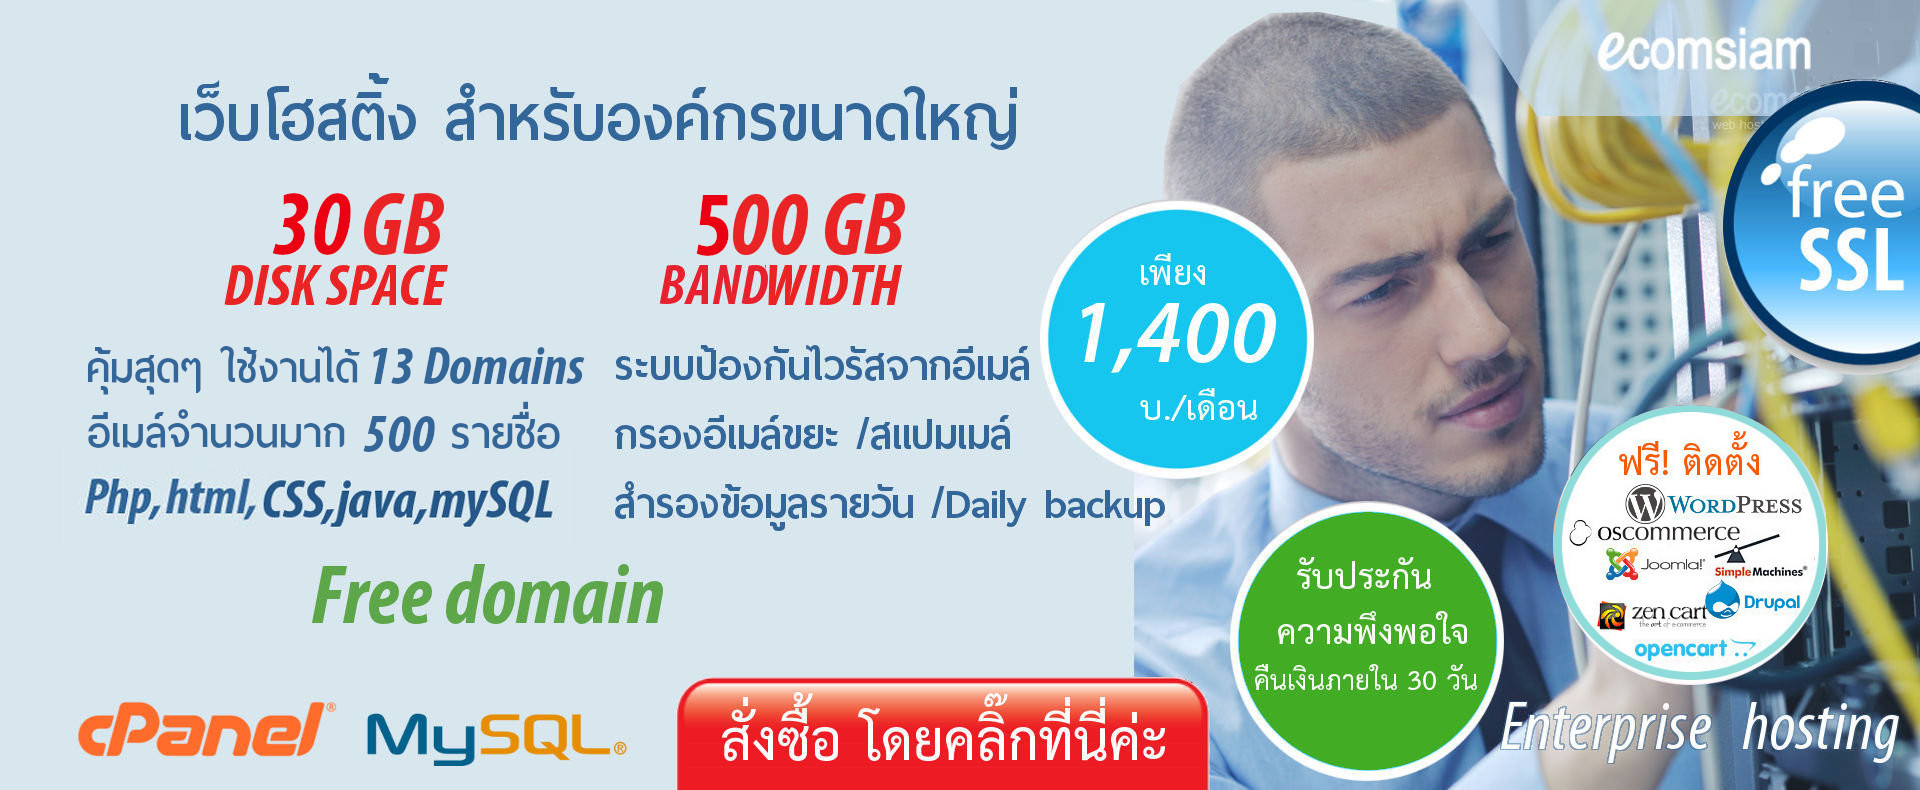 webhostthai.com web hosting thailand แนะนำ Enterprise web hosting thailand เว็บโฮสต์ติ้งสำหรับองค์กรขนาดใหญ่ พื้นที่มาก เพื่อการใช้งานเว็บไซต์และอีเมล์จำนวนมาก ราคาเพียง 1,400 บ./เดือน เว็บโฮสติ้งไทย ฟรี โดเมน ฟรี SSL ฟรีติดตั้ง แนะนำเว็บโฮสติ้ง บริการลูกค้า  Support ดูแลดี โดย webhostthai.com - enterprise web hosting thailand free domain